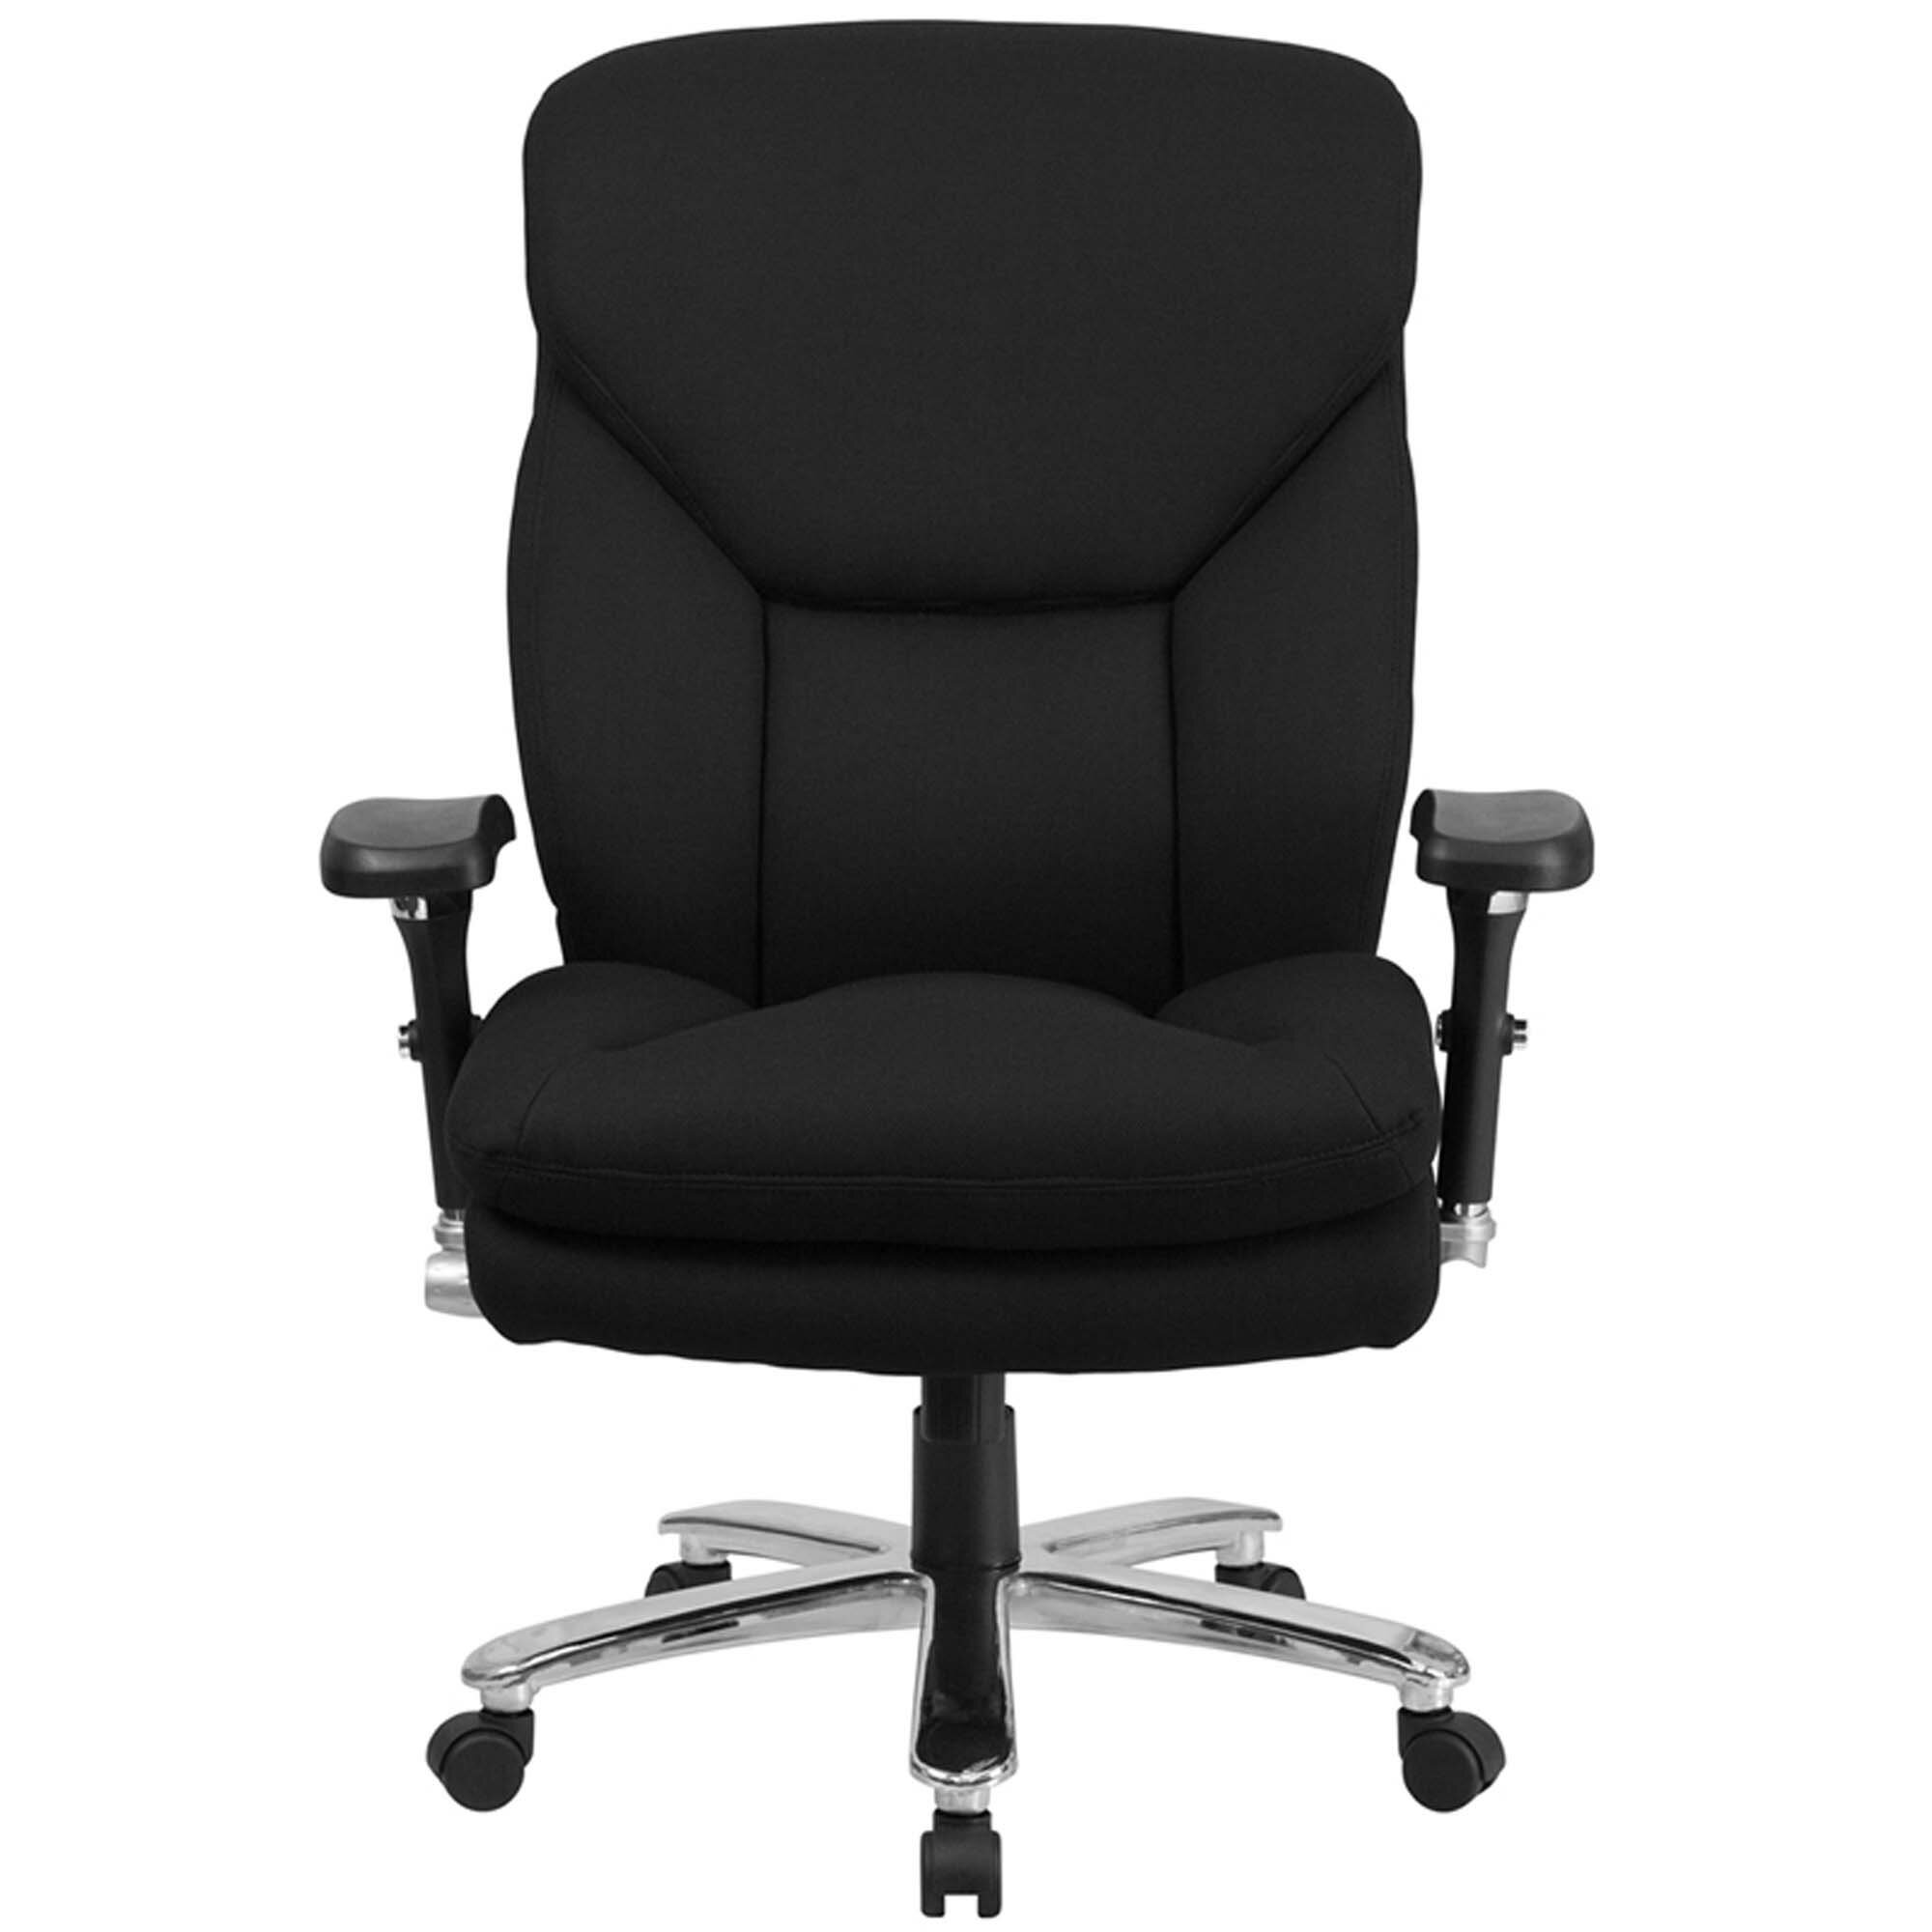 Inbox Zero 23 Large Seat Ergonomic Executive Chair with Flip Up